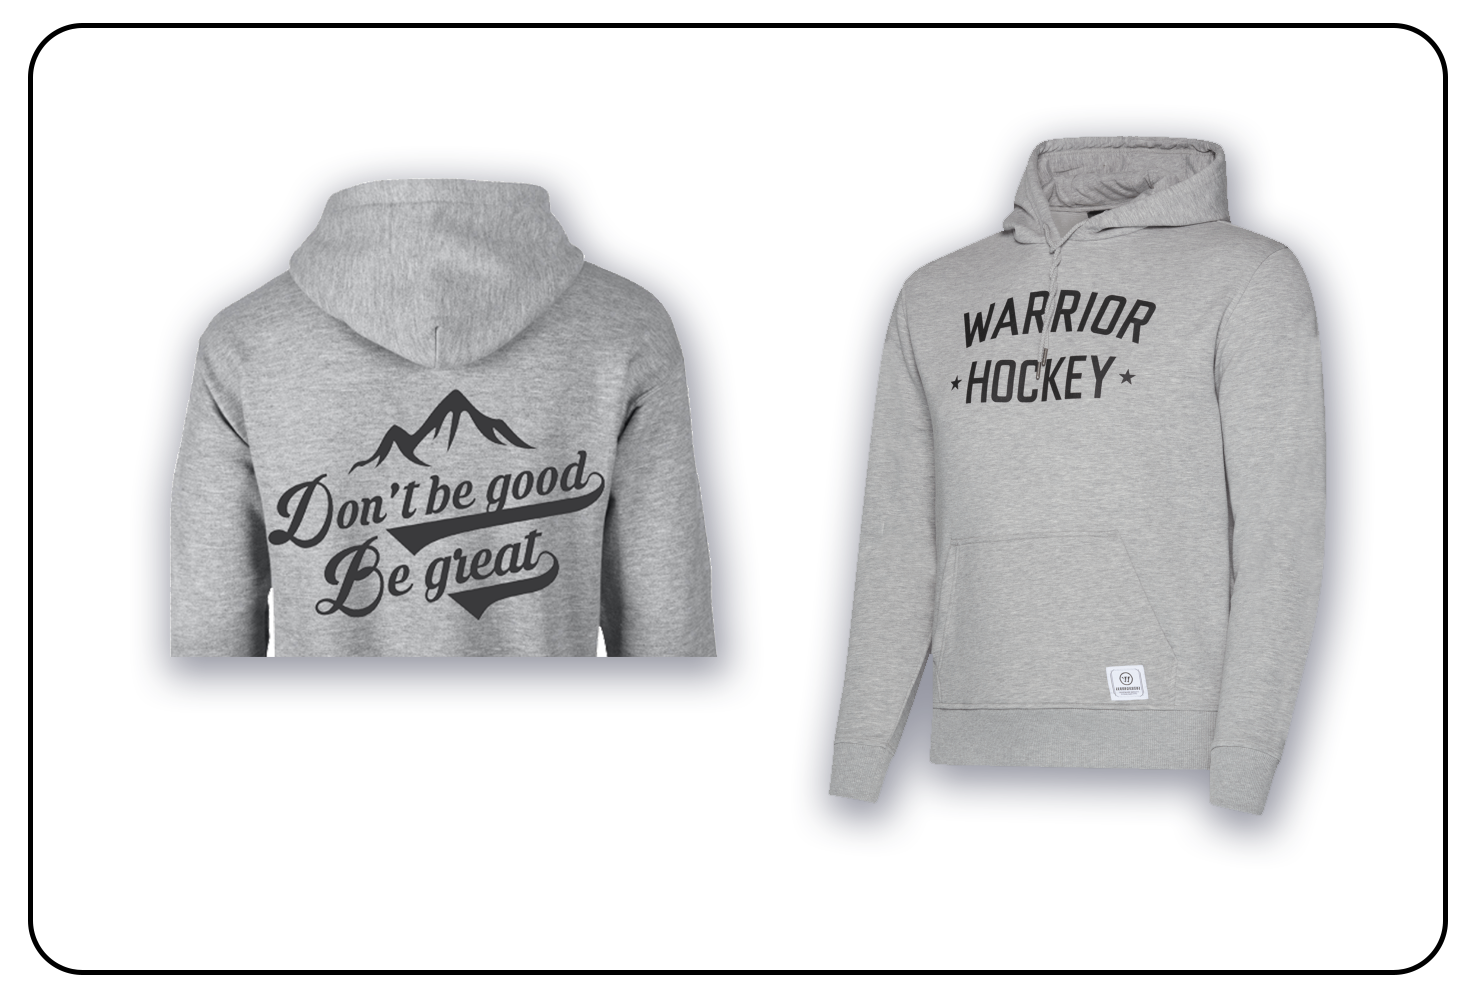 Custom hoodie and jacket printing for stylish apparel.